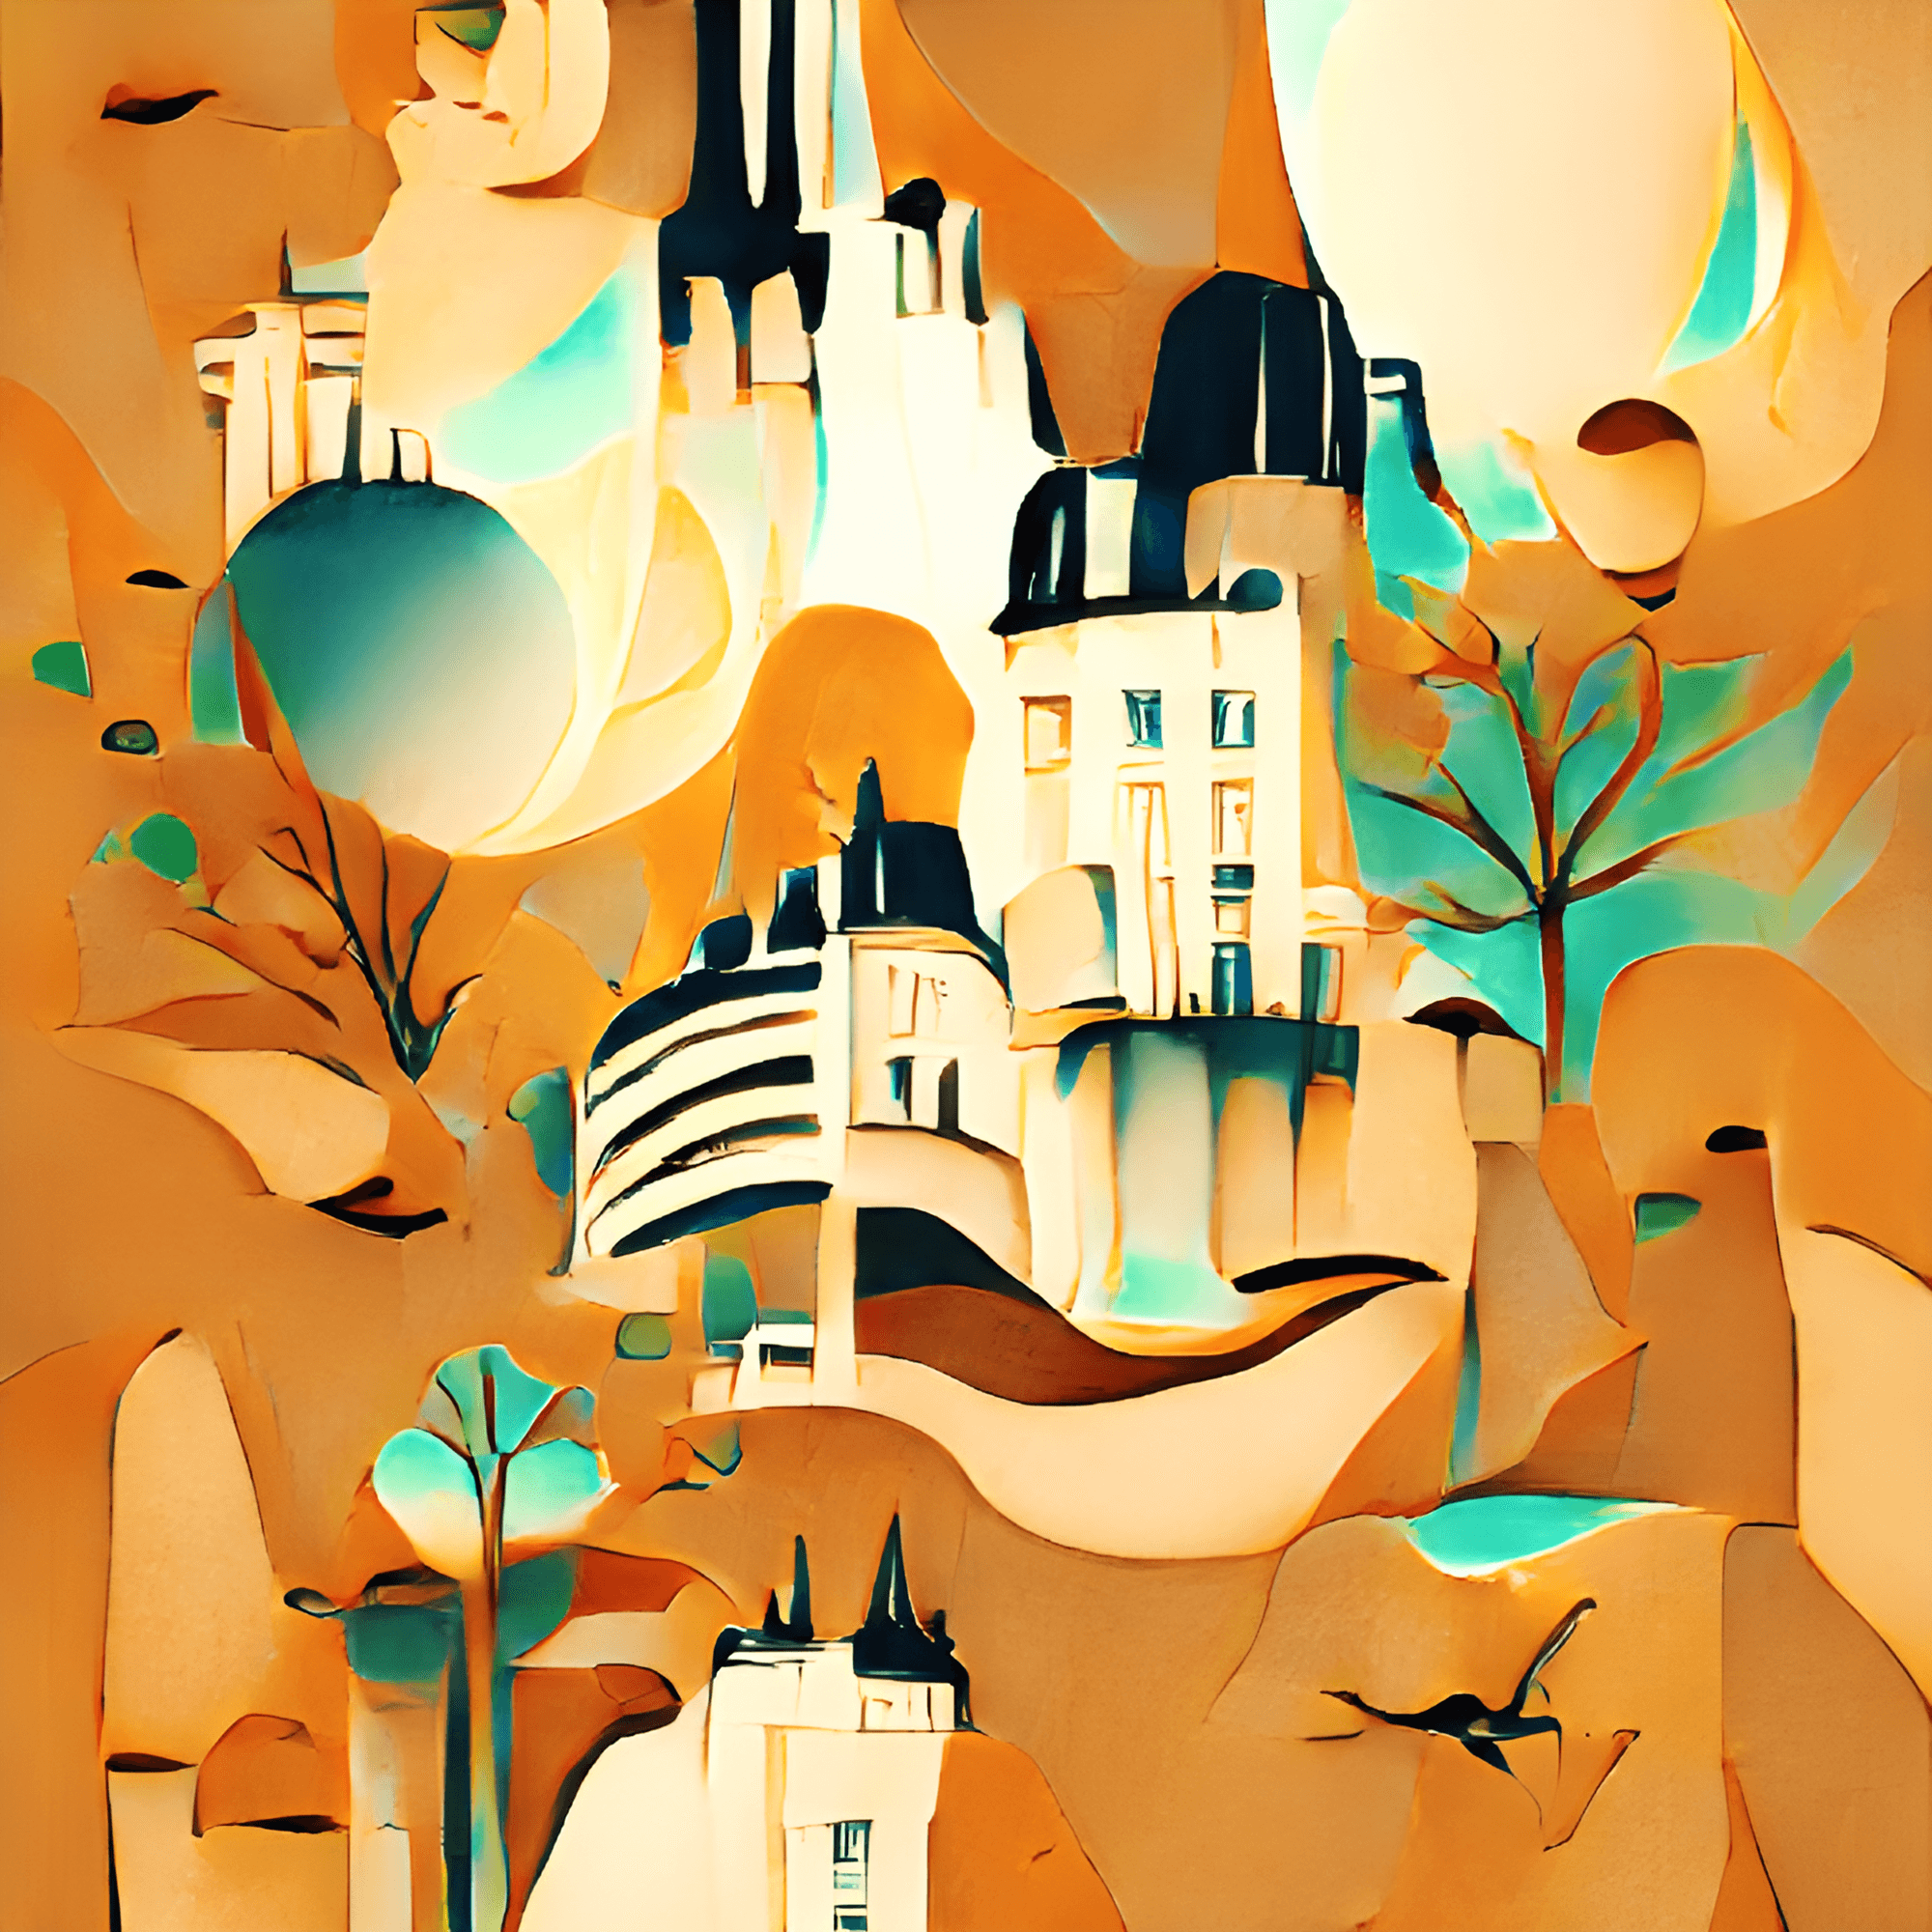 Paris as a Fantatsy Land